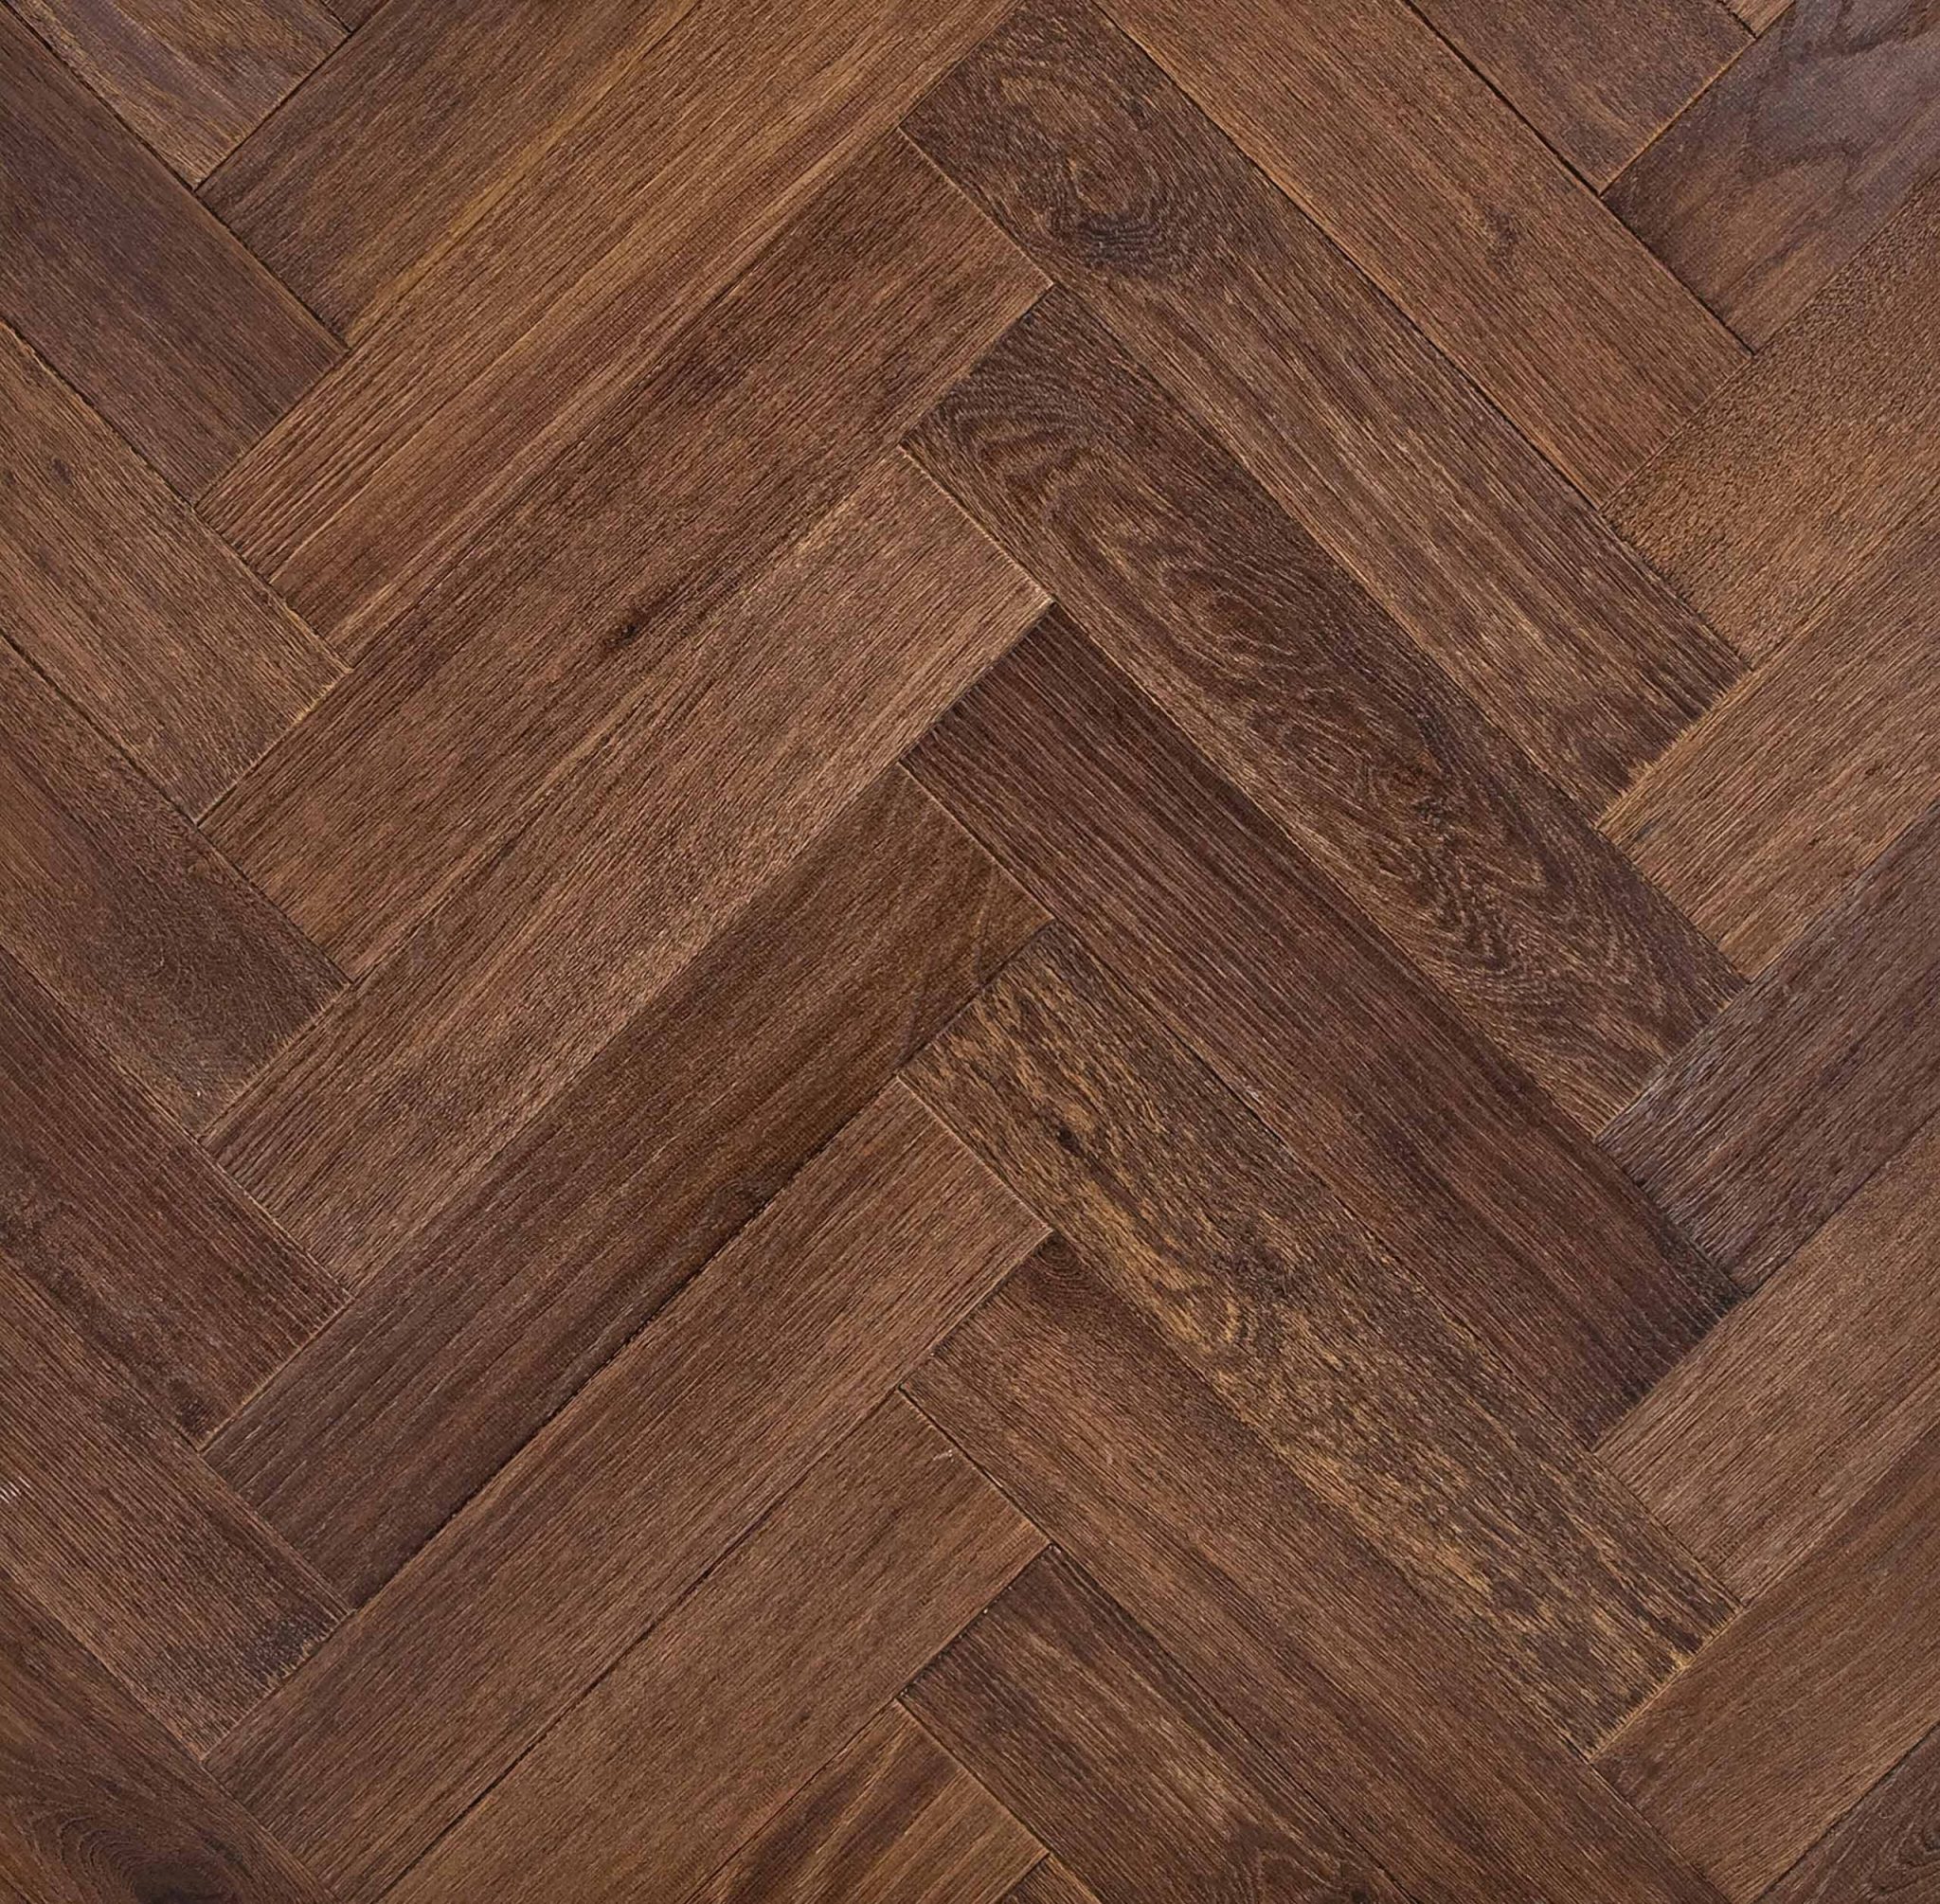 Engineered oak wood flooring named Deco Parquet Tannery Brown